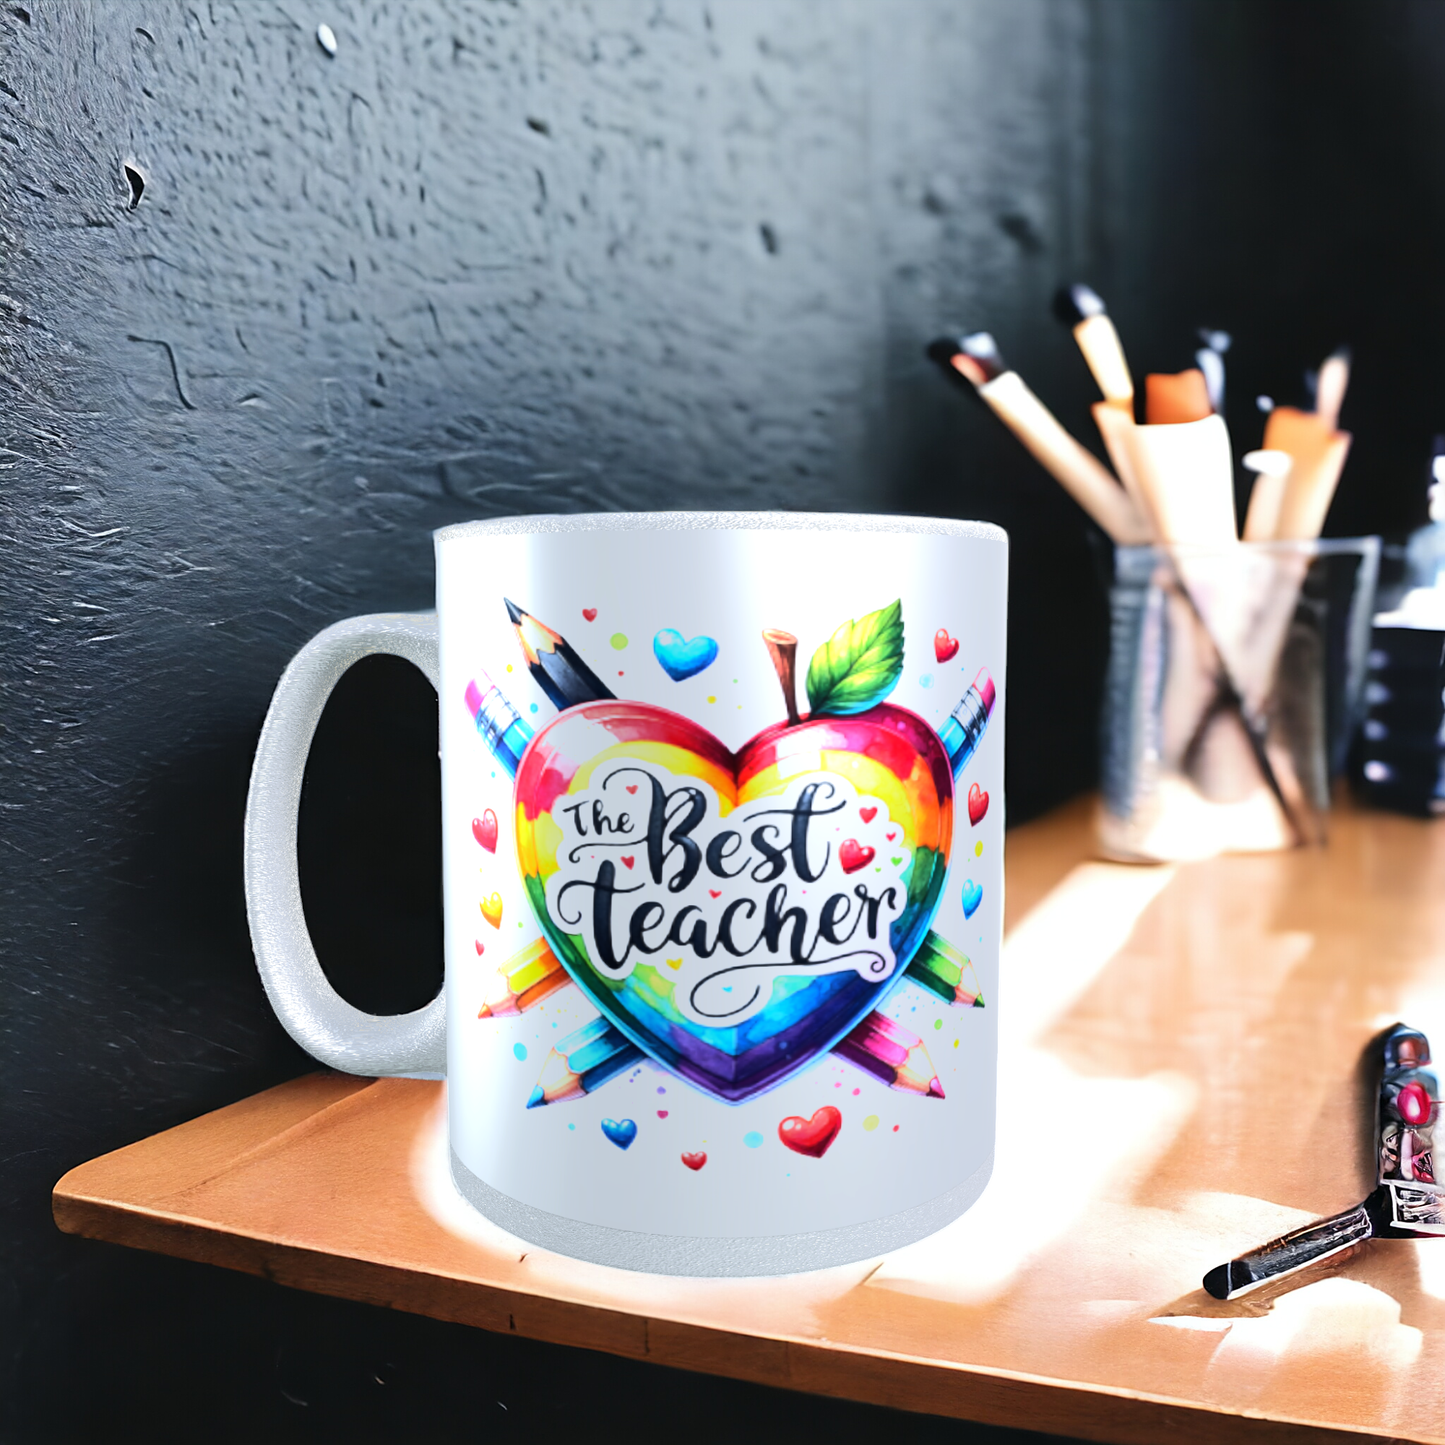 Teacher coffee mugs